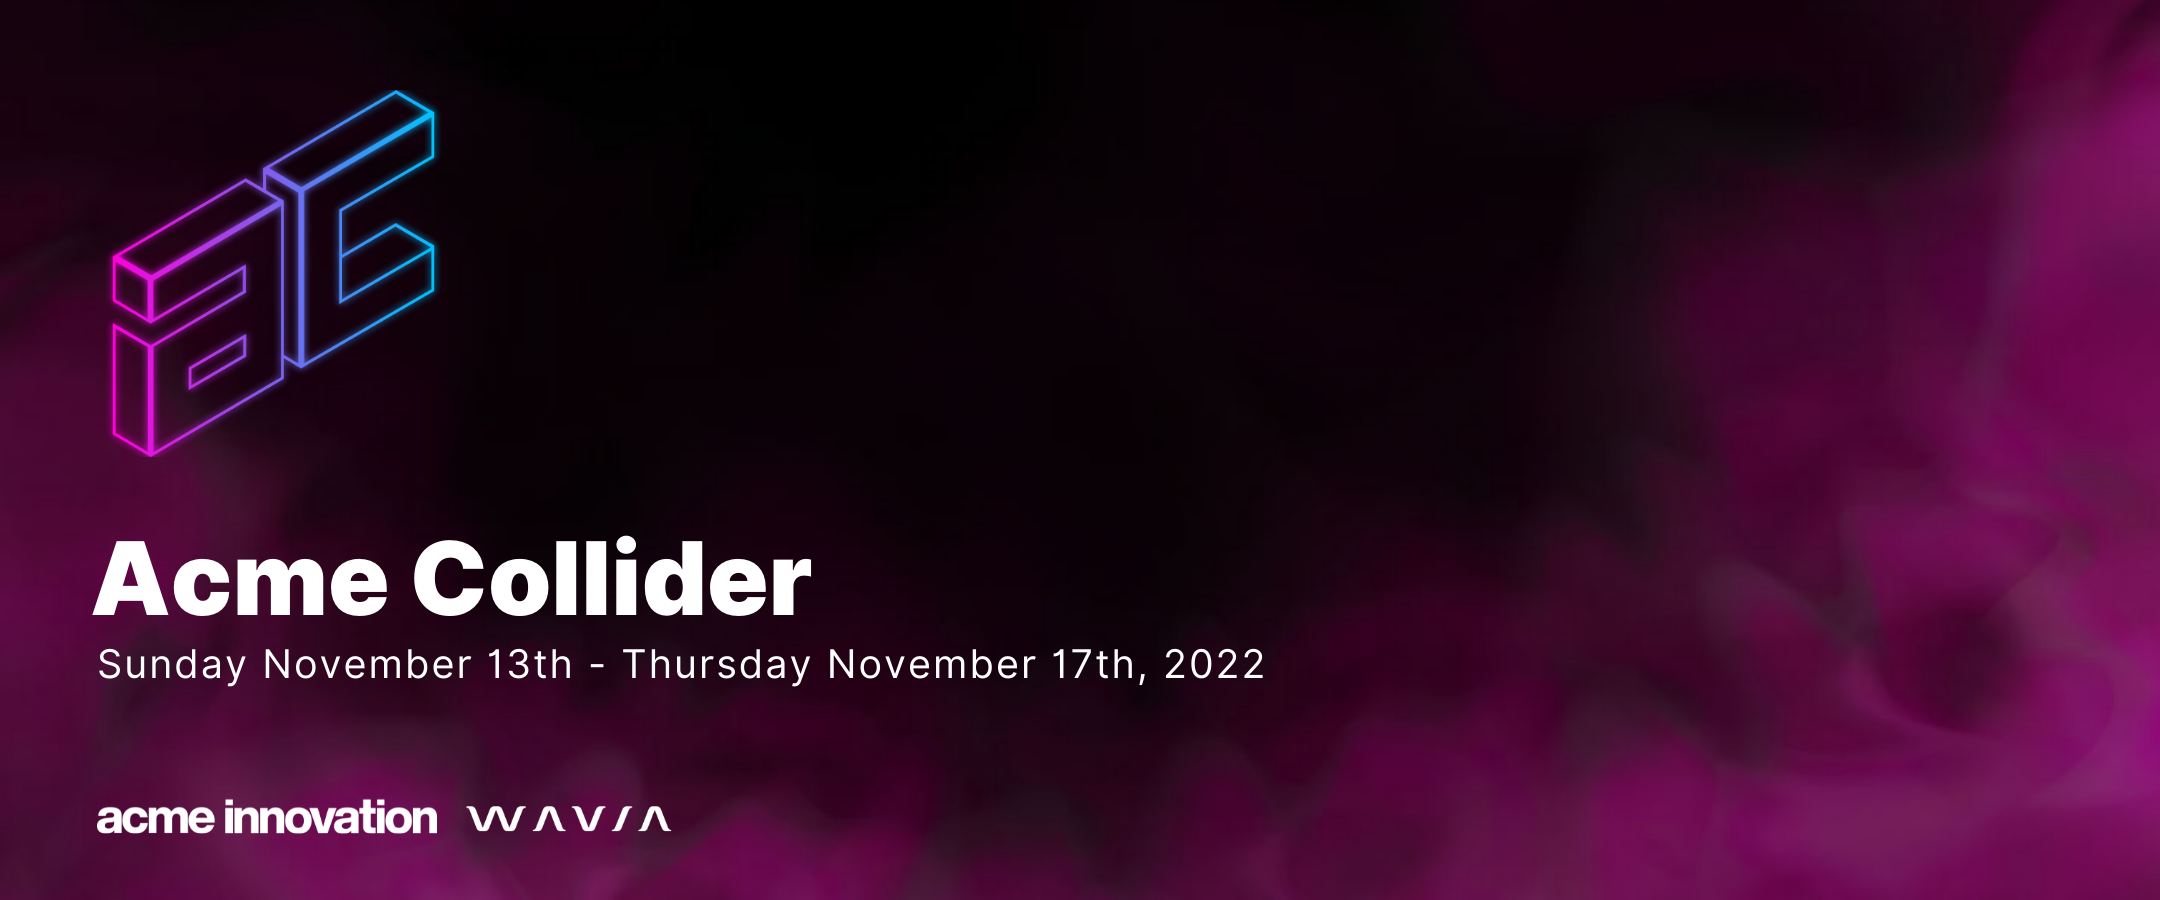 ACME Collider 2022